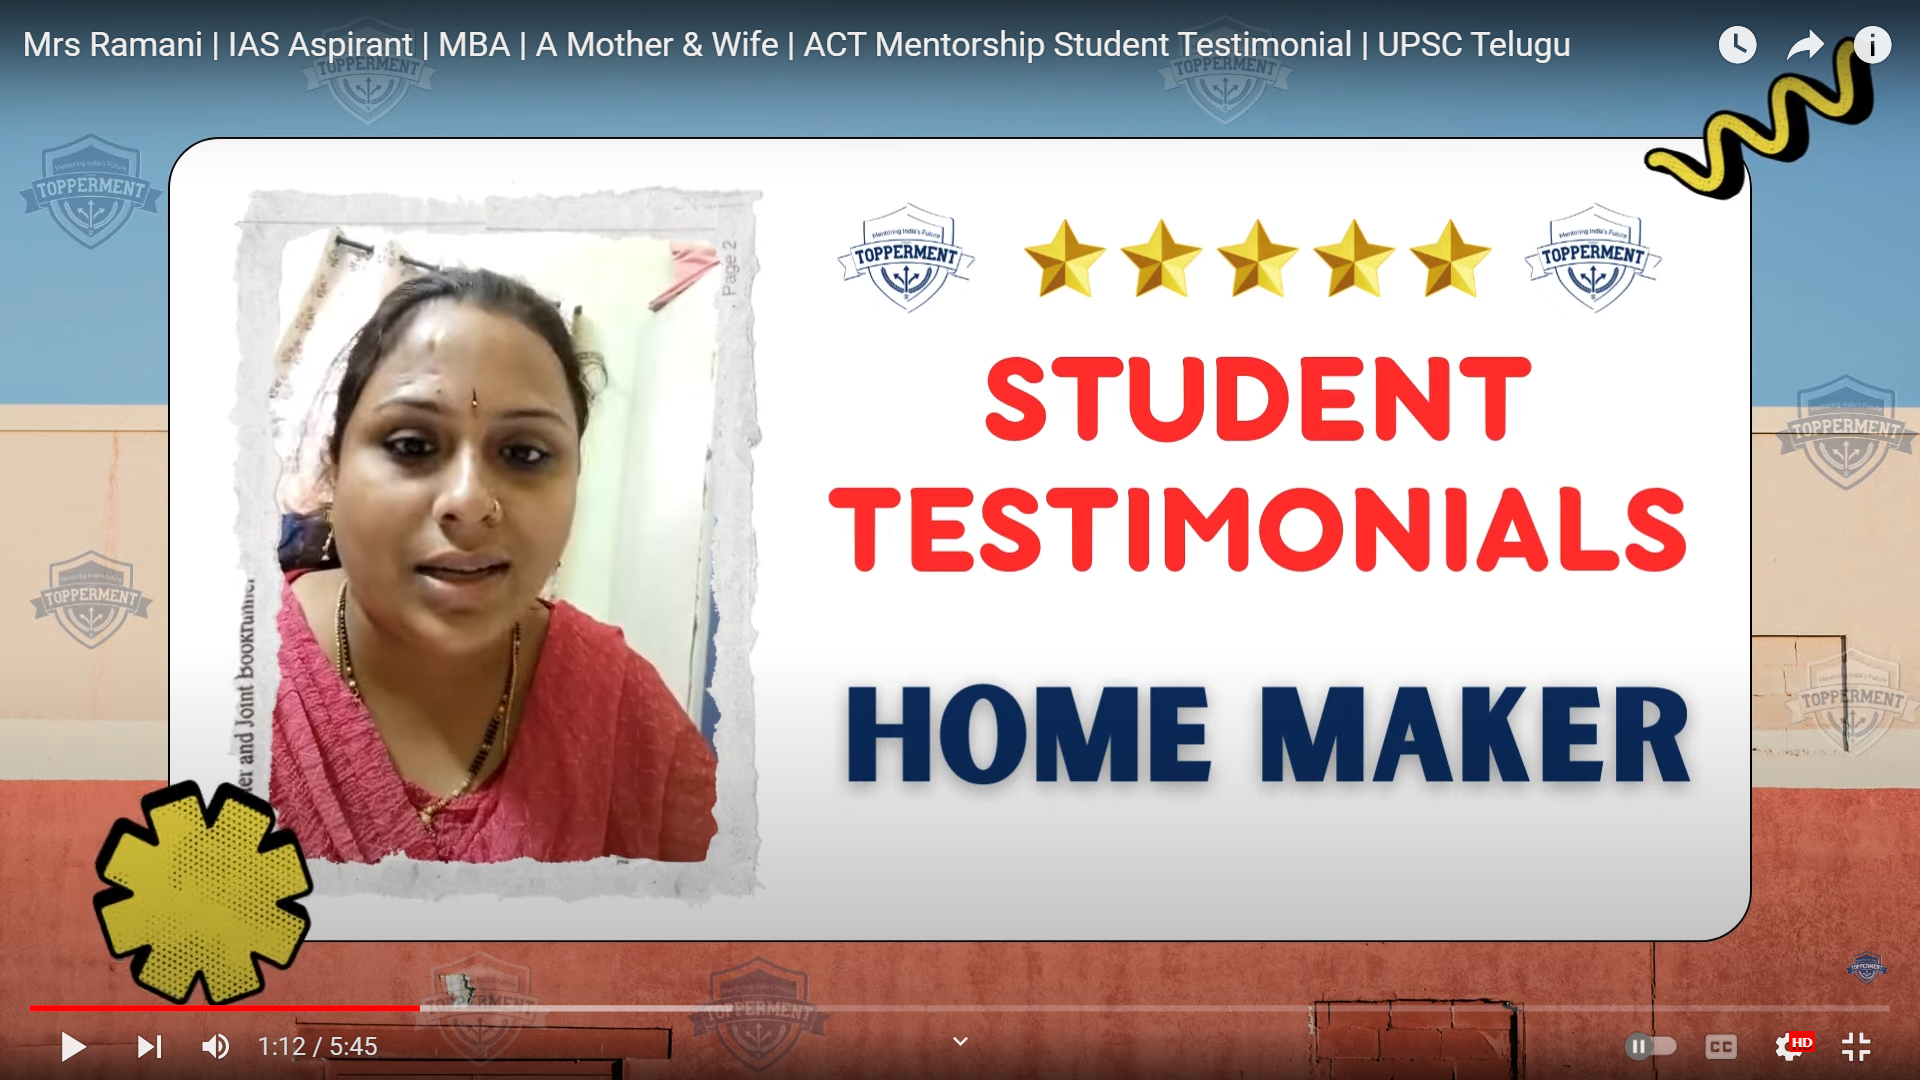 Mrs Ramani | IAS Aspirant | MBA | A Mother & Wife | ACT Mentorship Student Testimonial | UPSC Telugu